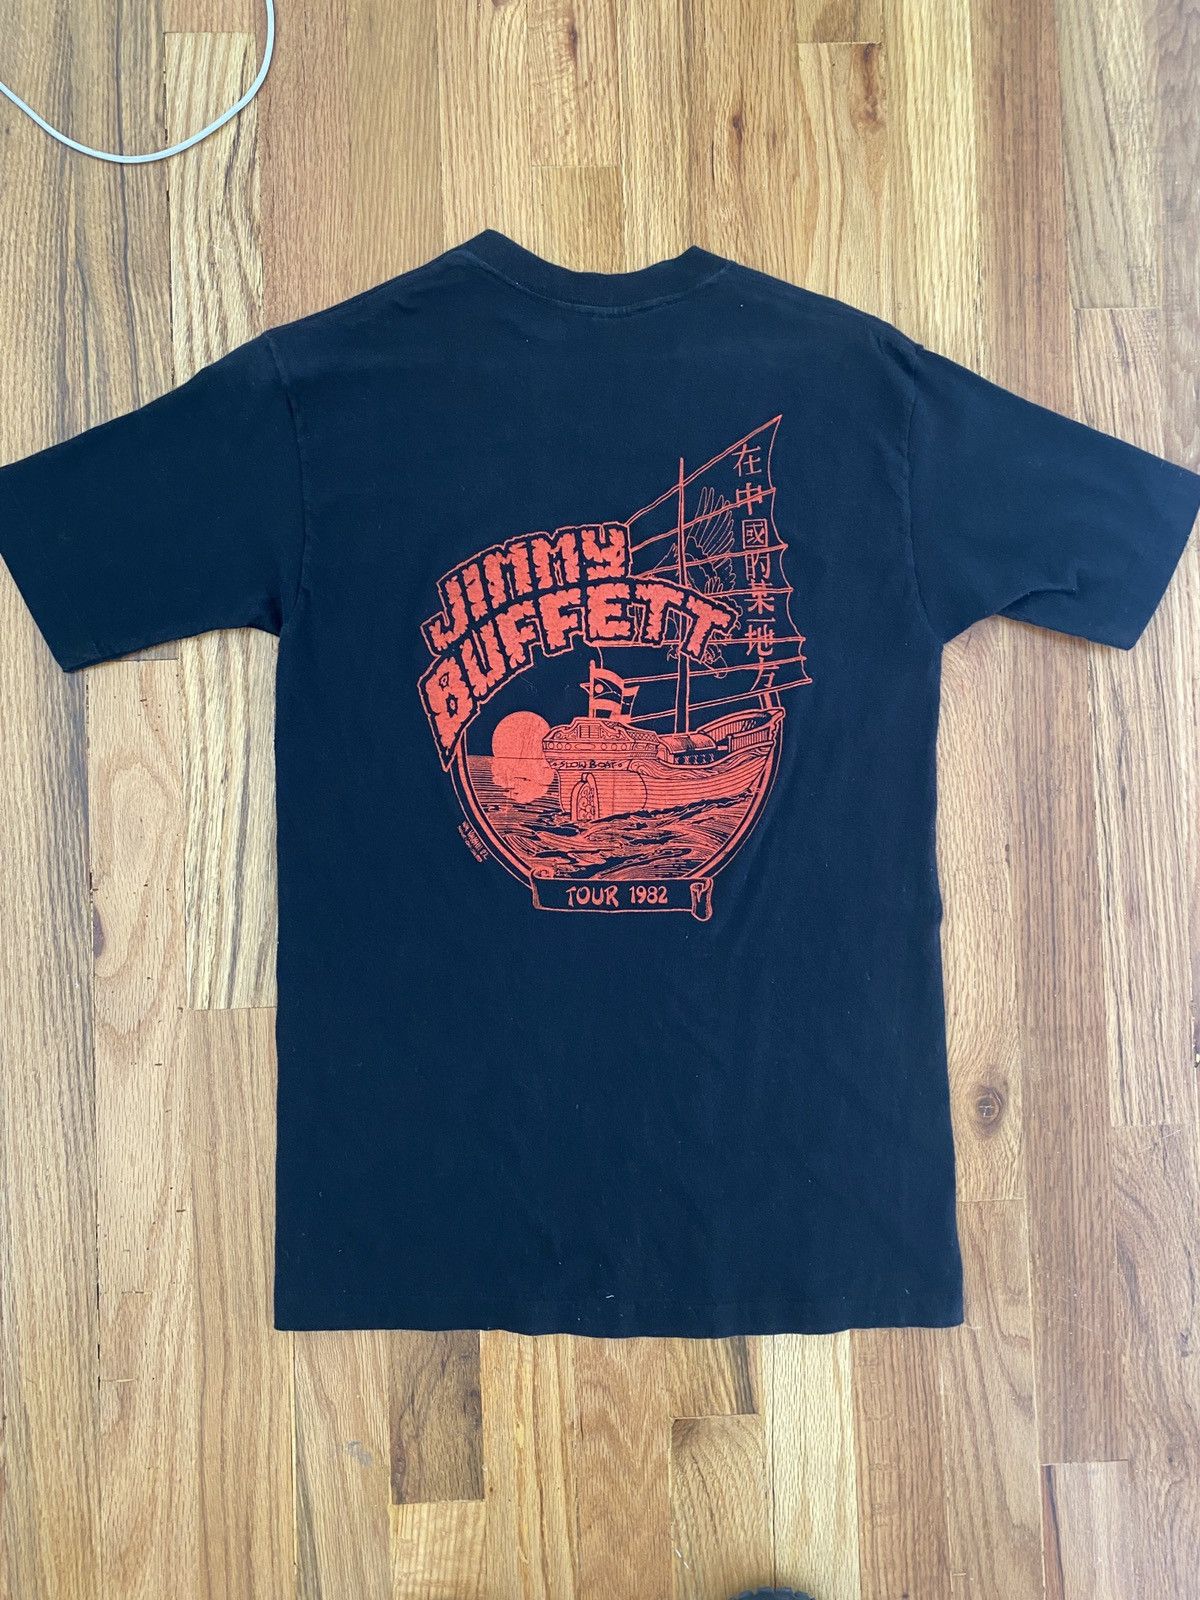 Vintage Jimmy Buffett 1982 Crew Shirt Size US S / EU 44-46 / 1 - 2 Preview